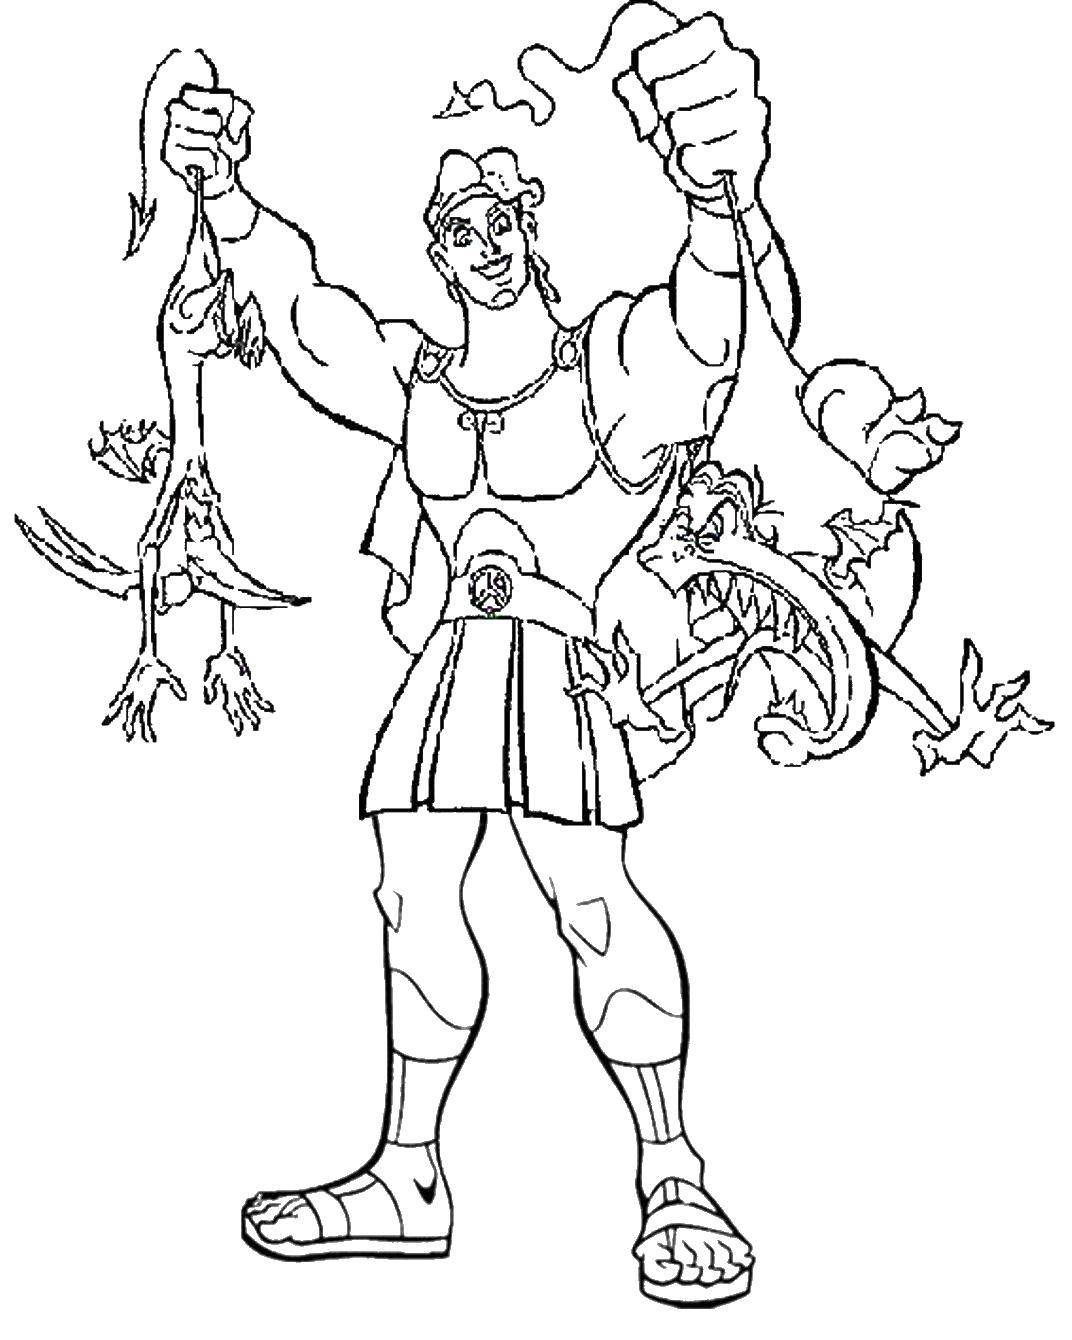 Coloring The strength of Hercules. Category cartoons. Tags:  Cartoon character.